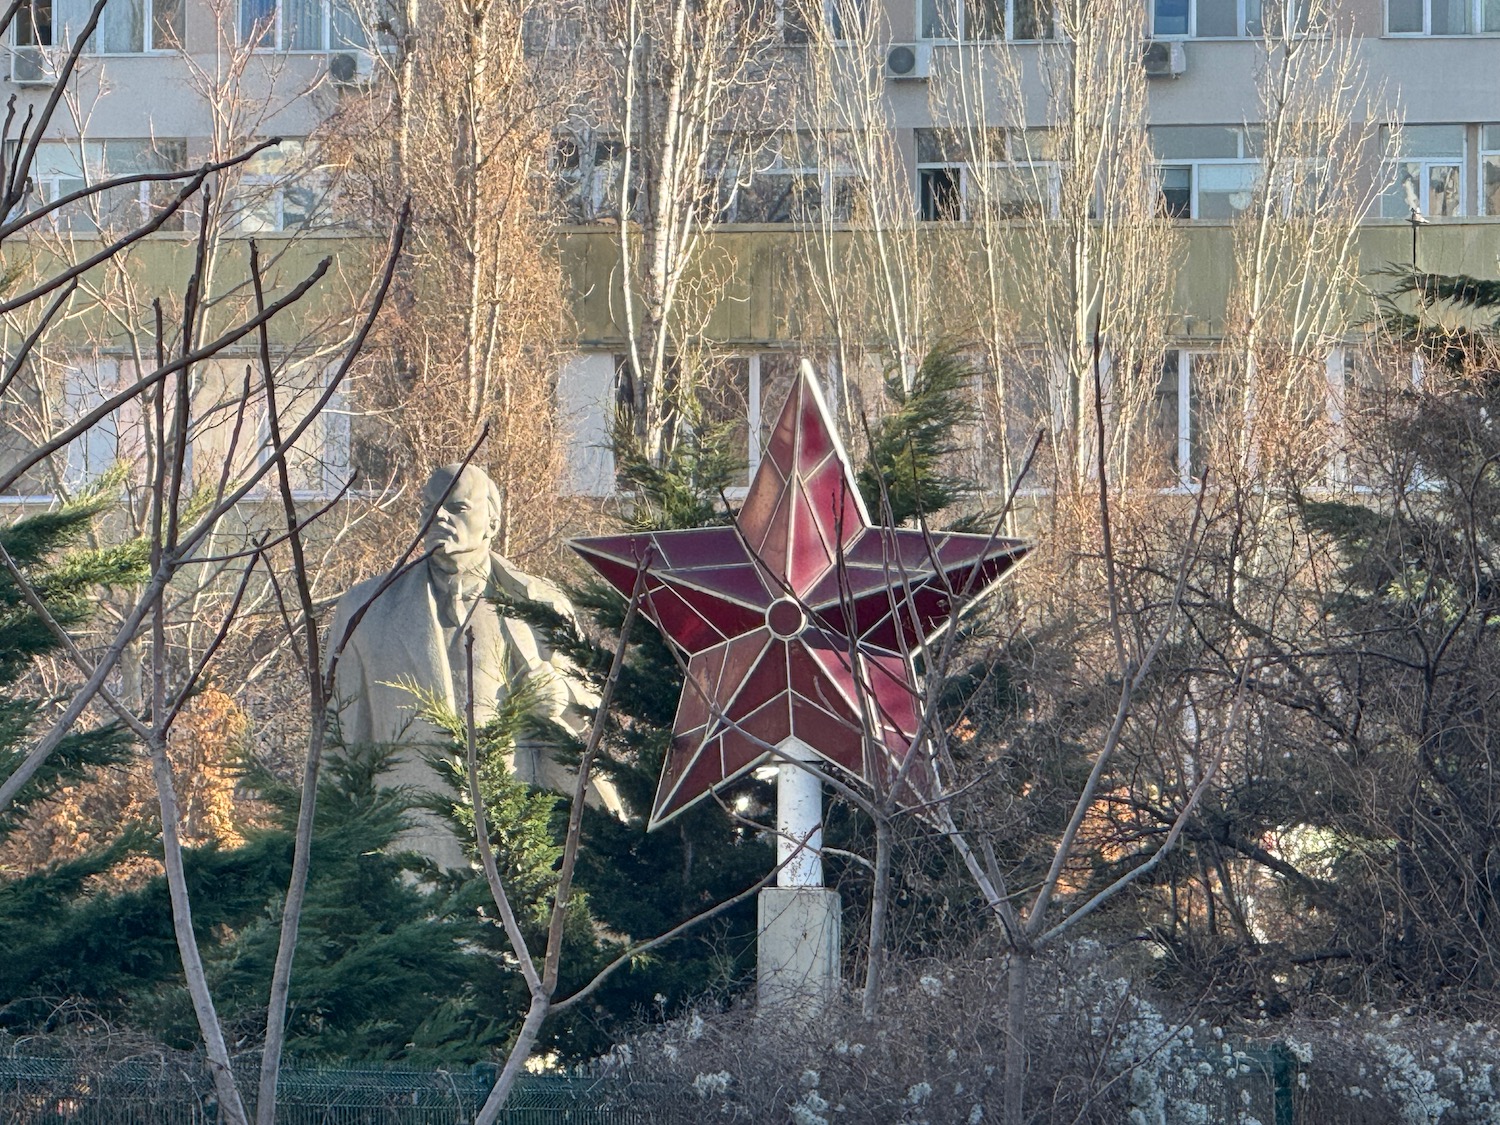 Museum Of Socialist Art In Sofia, Bulgaria Provides Road Map For Confederdate Statue Problem In USA